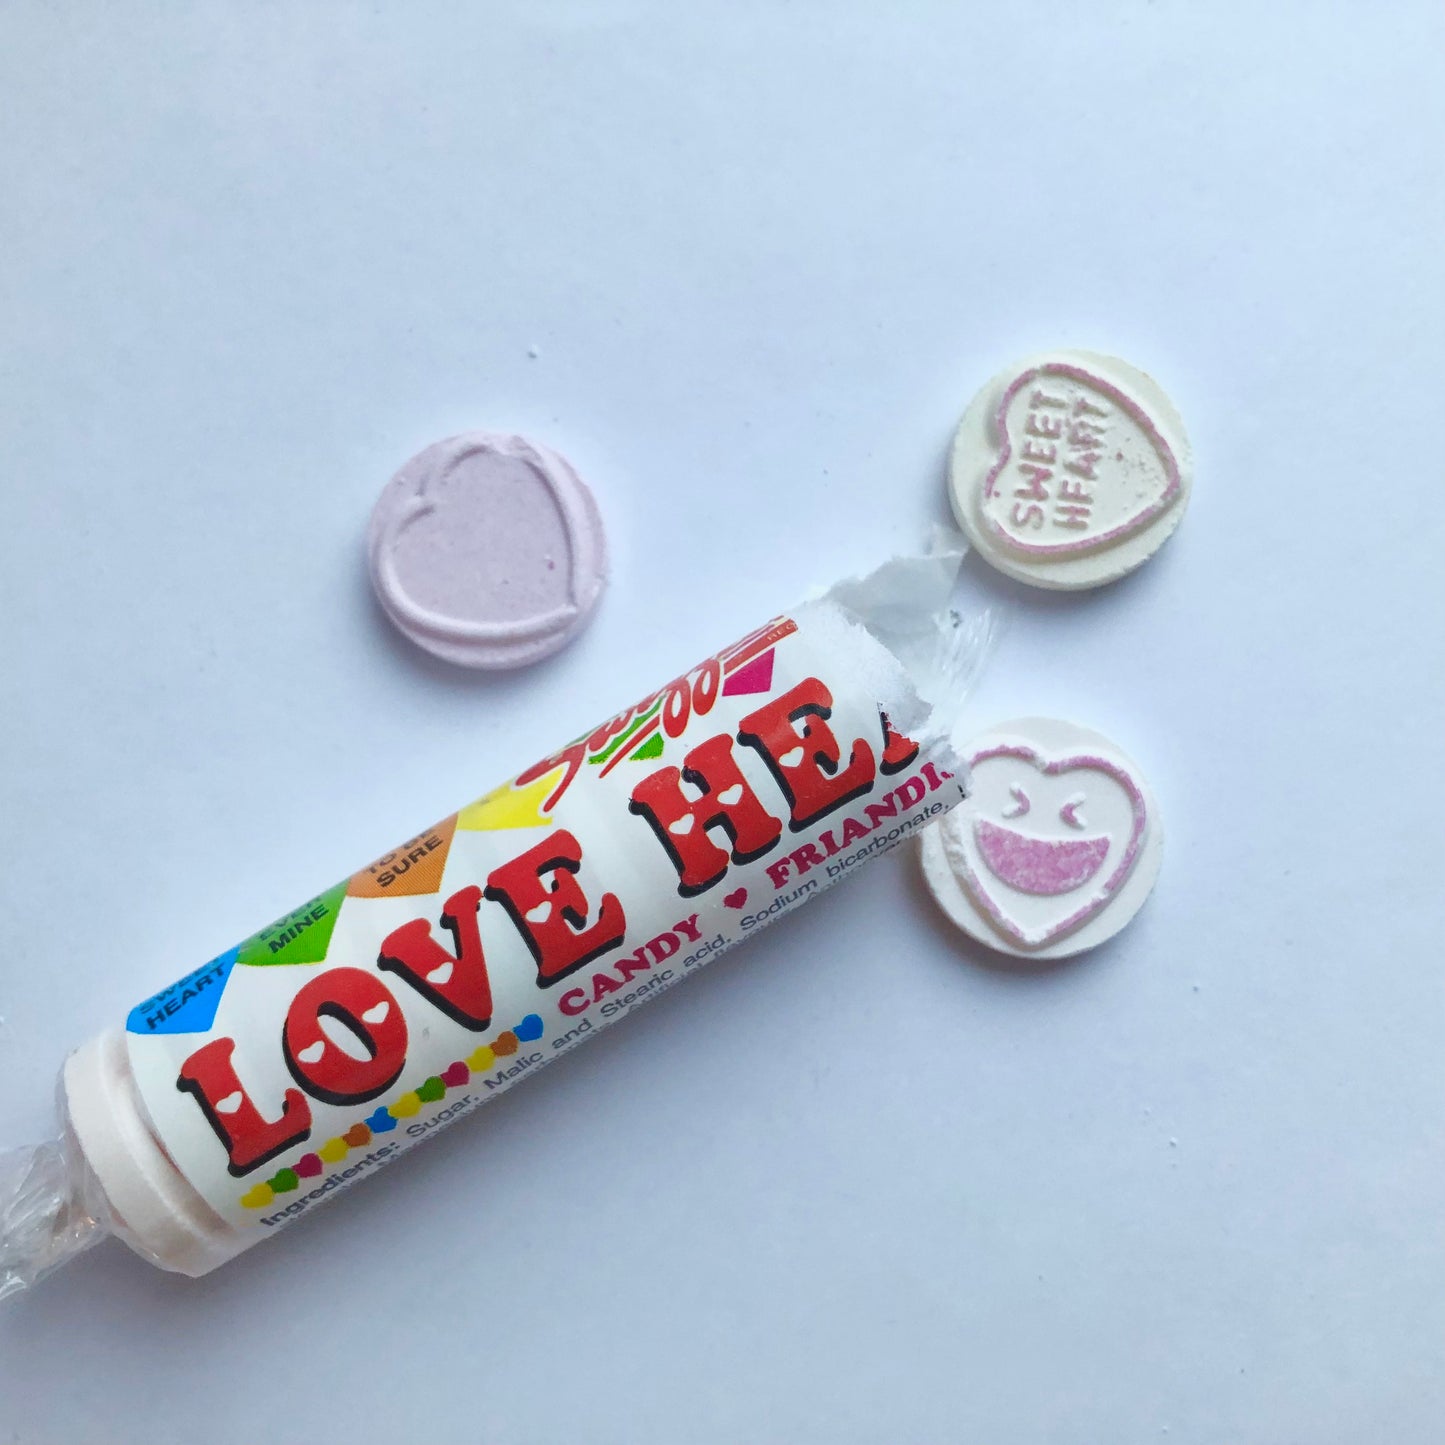 Swizzle Love Hearts _Candy